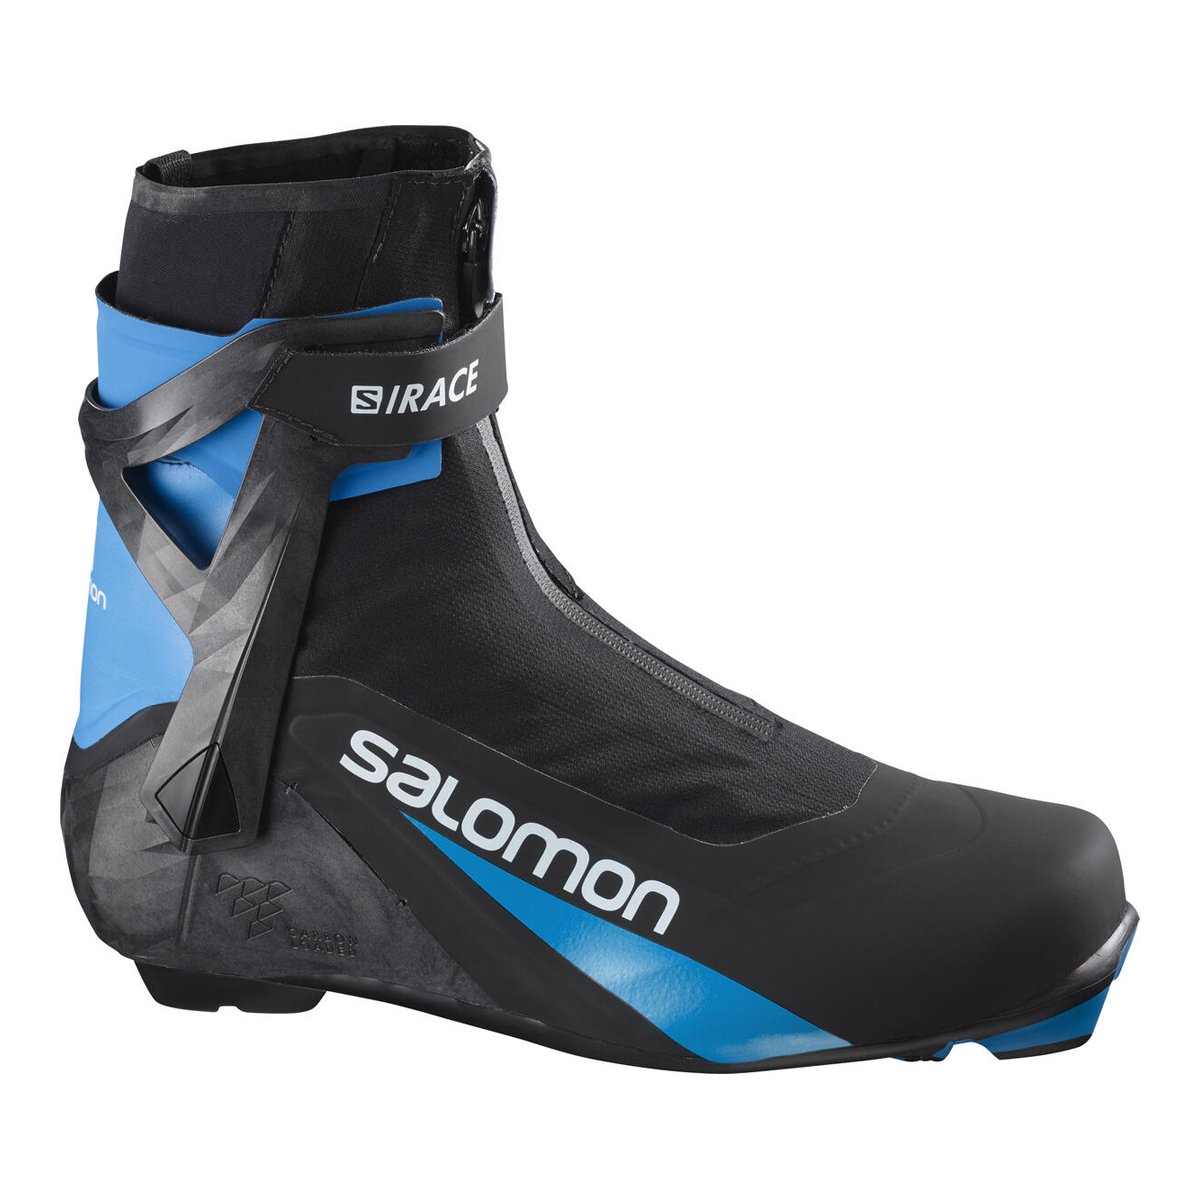 Salomon S/RACE CARBON SKATE PROLINK, 6.5 uk